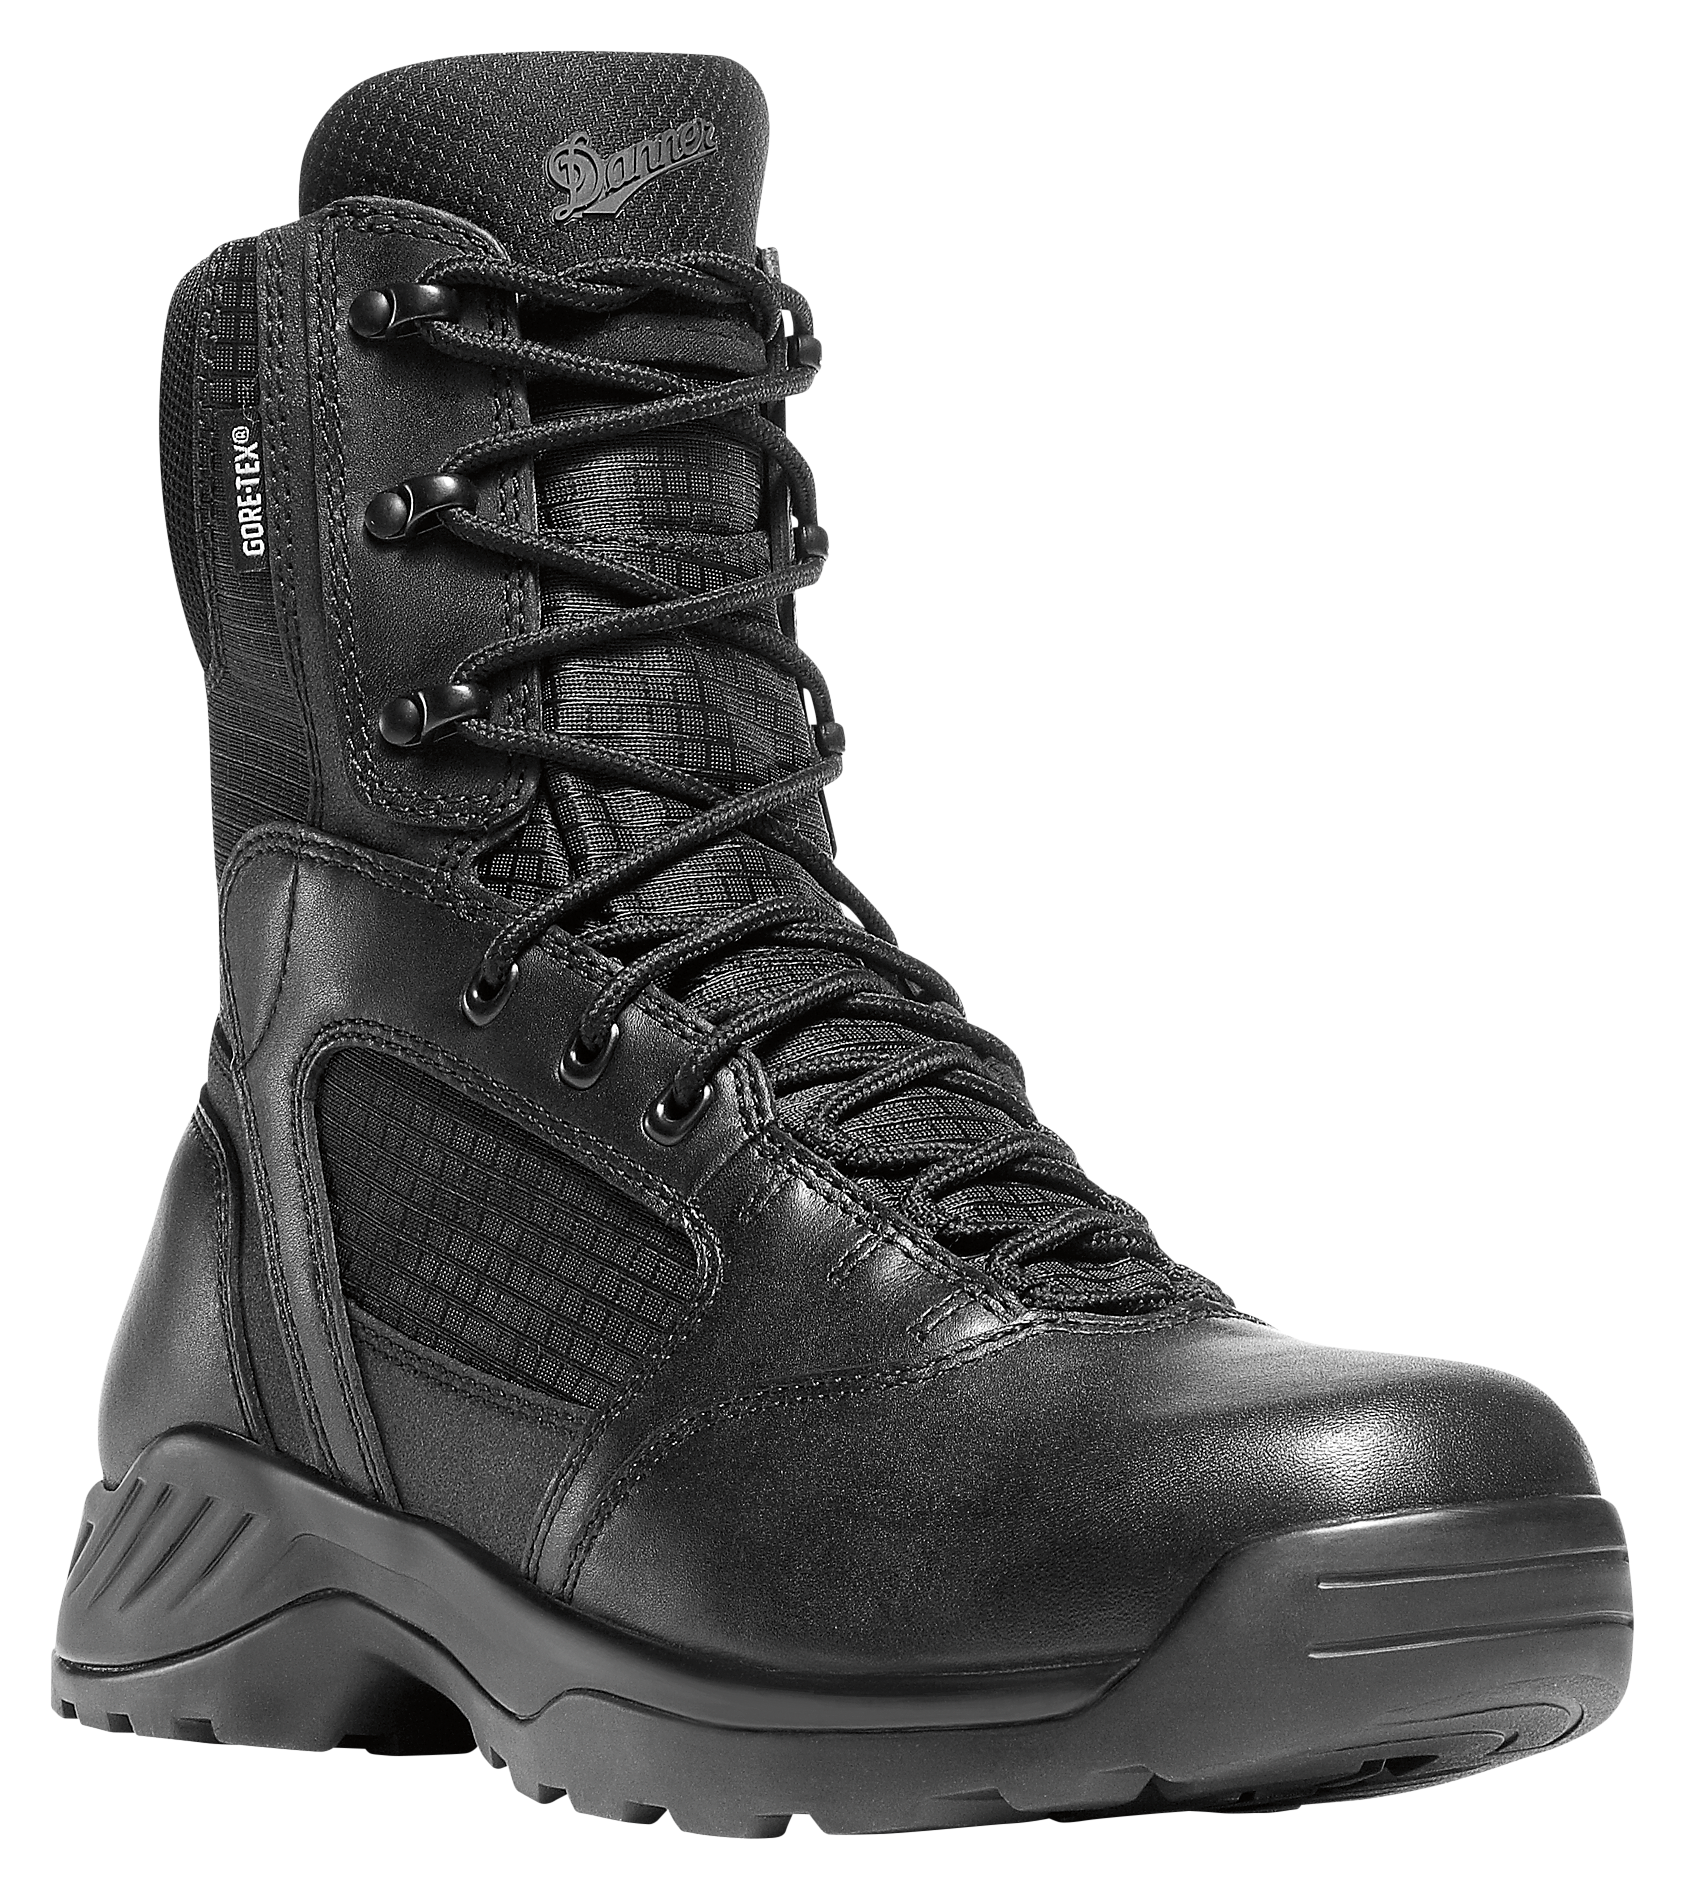 Danner Kinetic GTX Side-Zip Waterproof Tactical Duty Boots for Men - Black - 10W